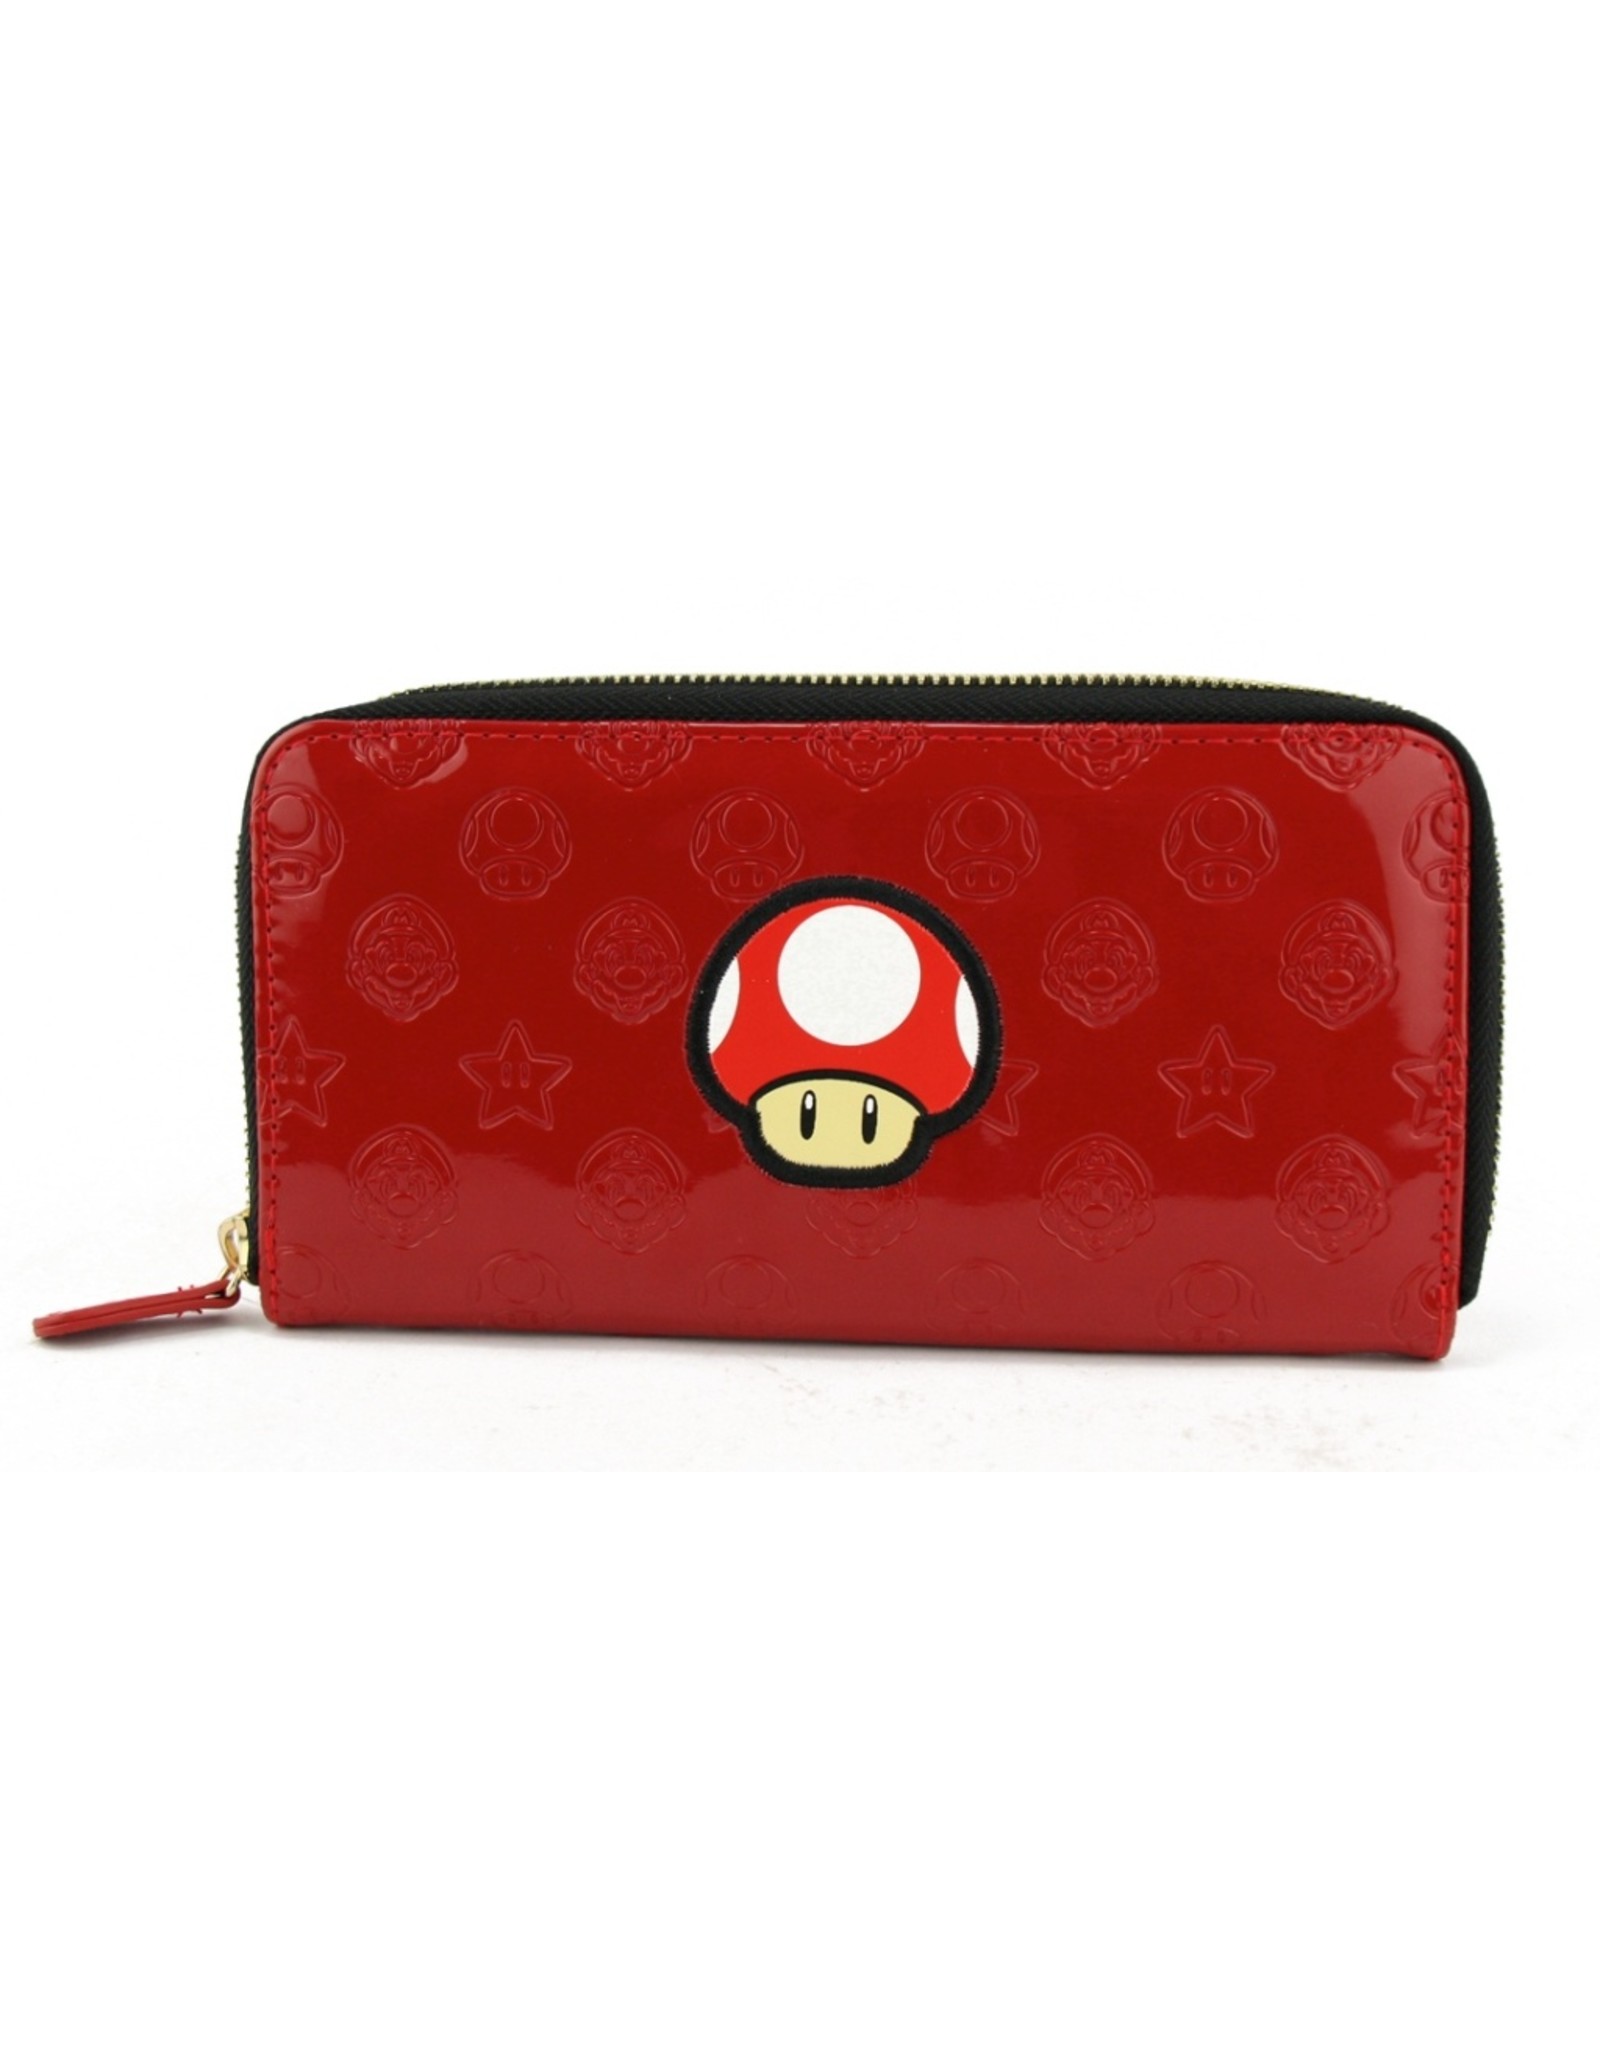 Nintendo Merchandise wallets - Nintendo Super Mario Mushroom wallet